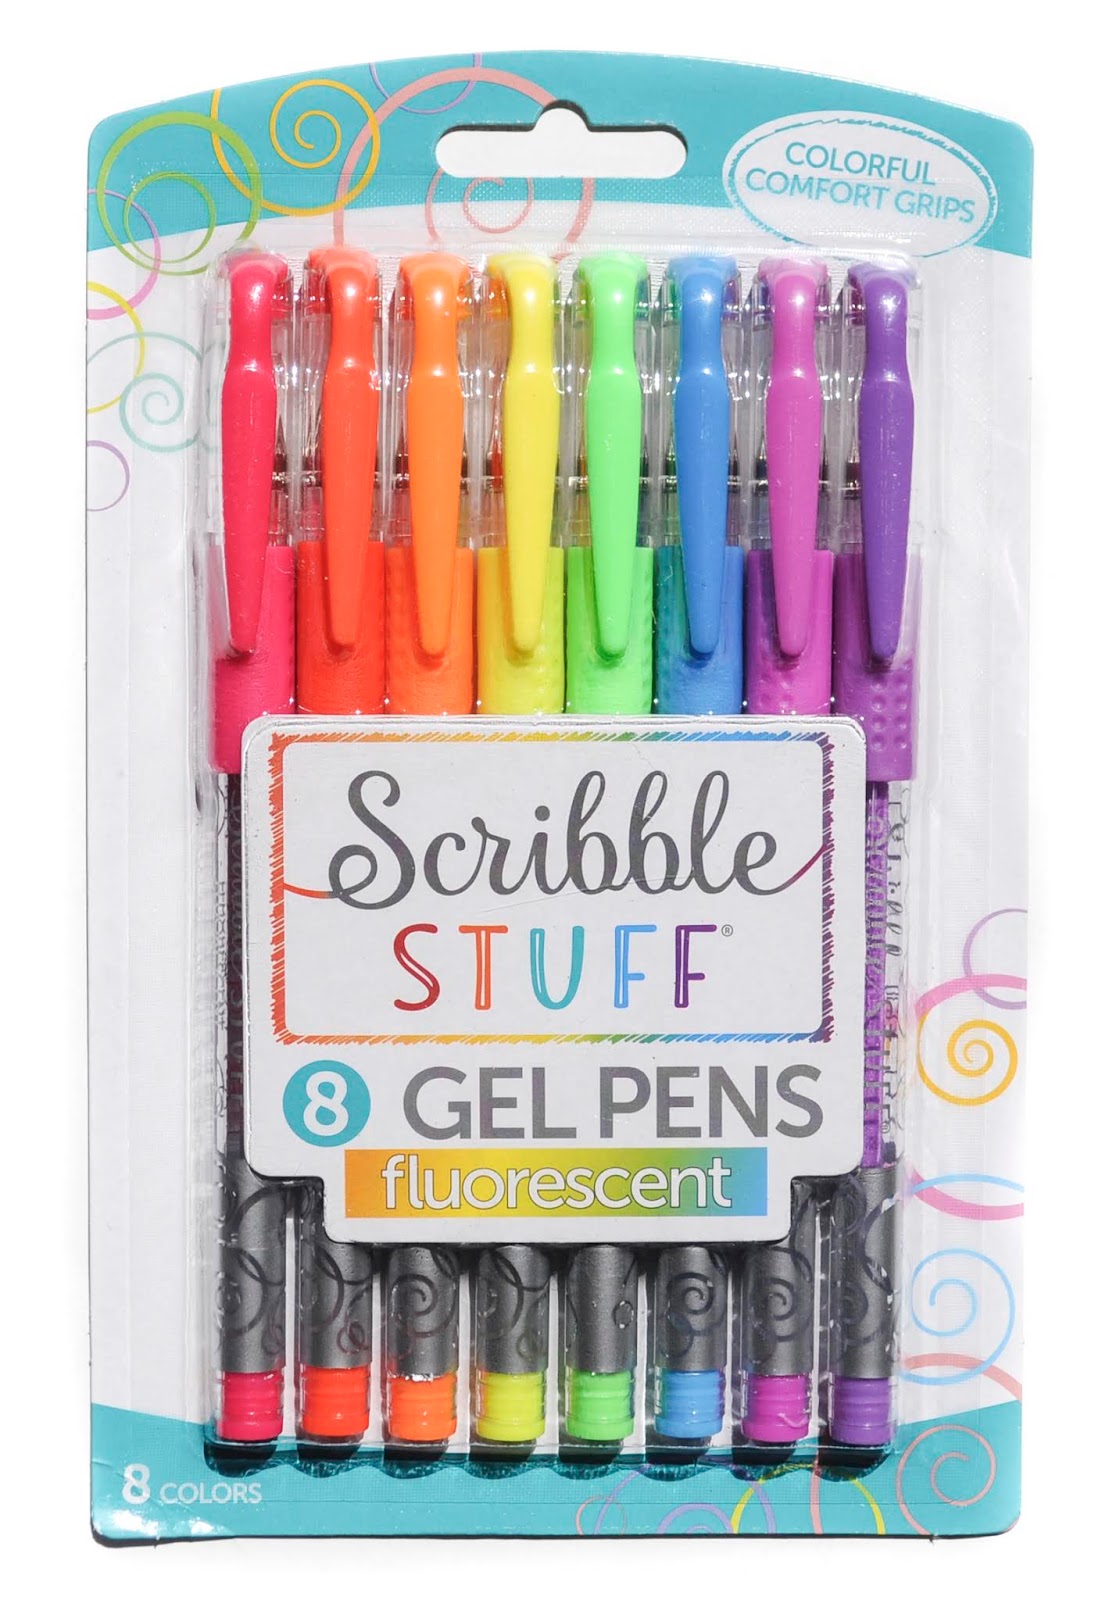 Scribble Stuff Scented Gel Pens from Mattel 